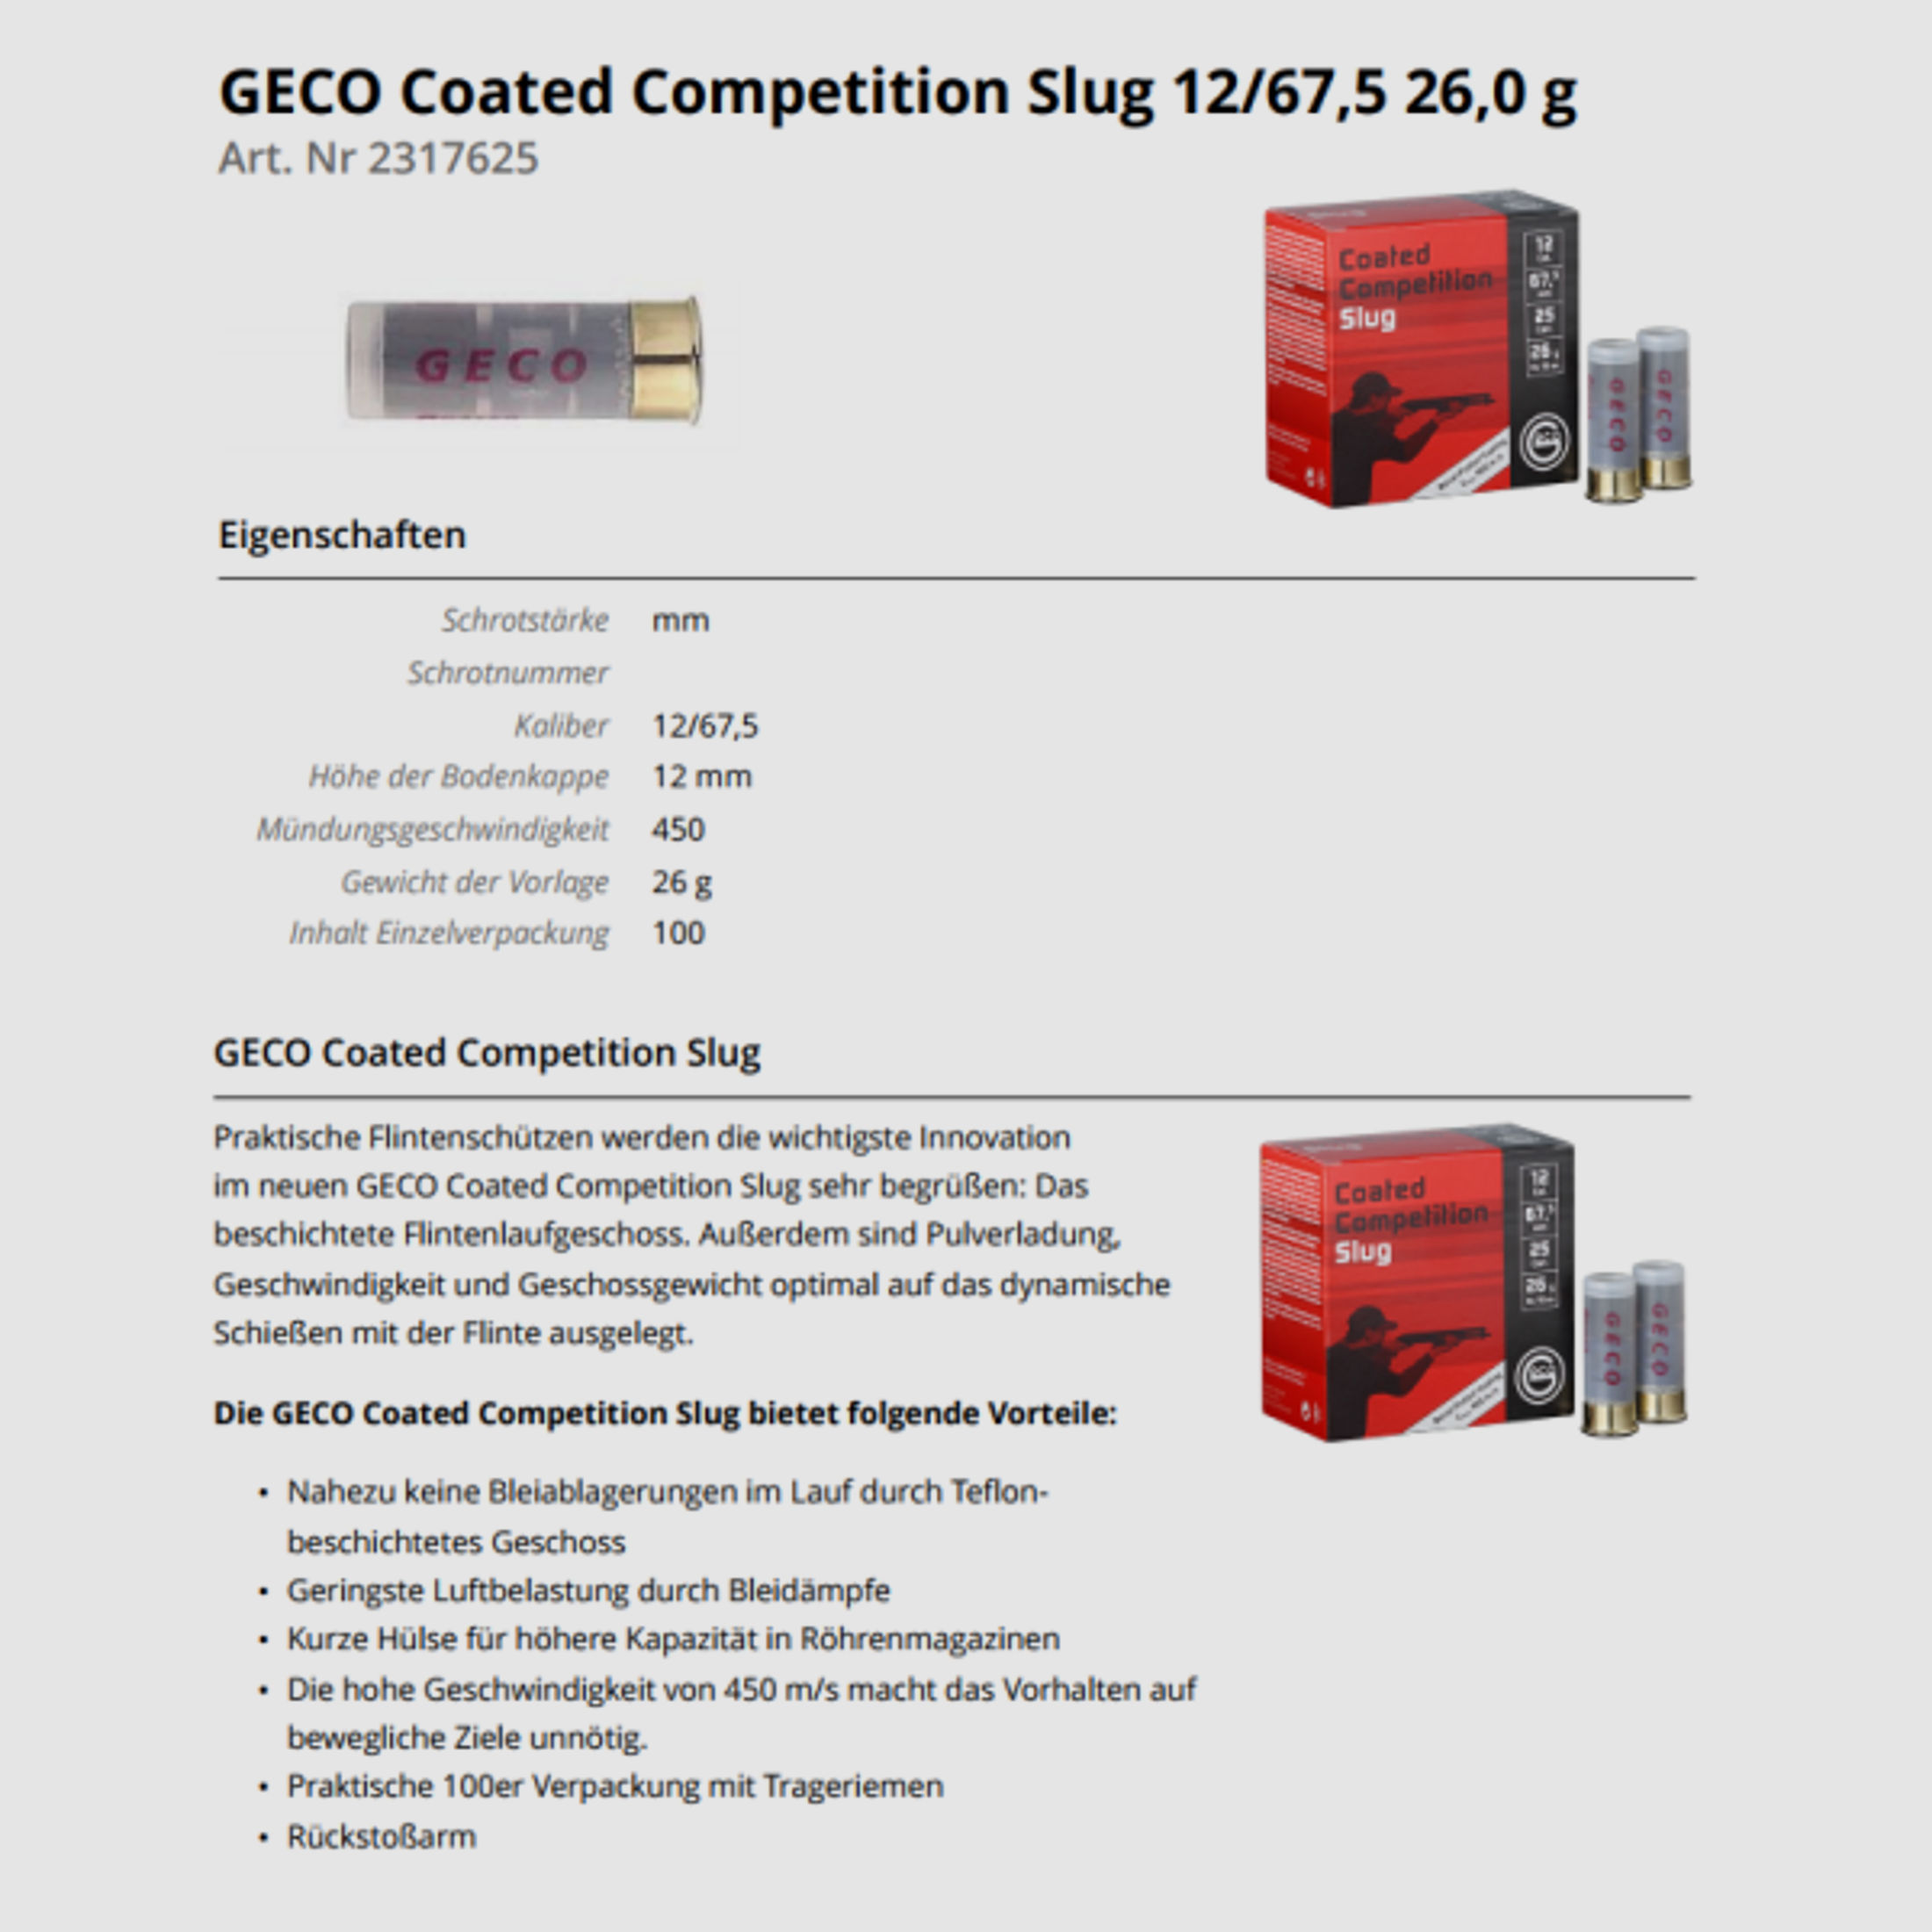 GECO Flintenlaufgeschosse 12/67,5 CompetSlug COATED 26g 100 Stk BLACK    ab 0,88/Stk